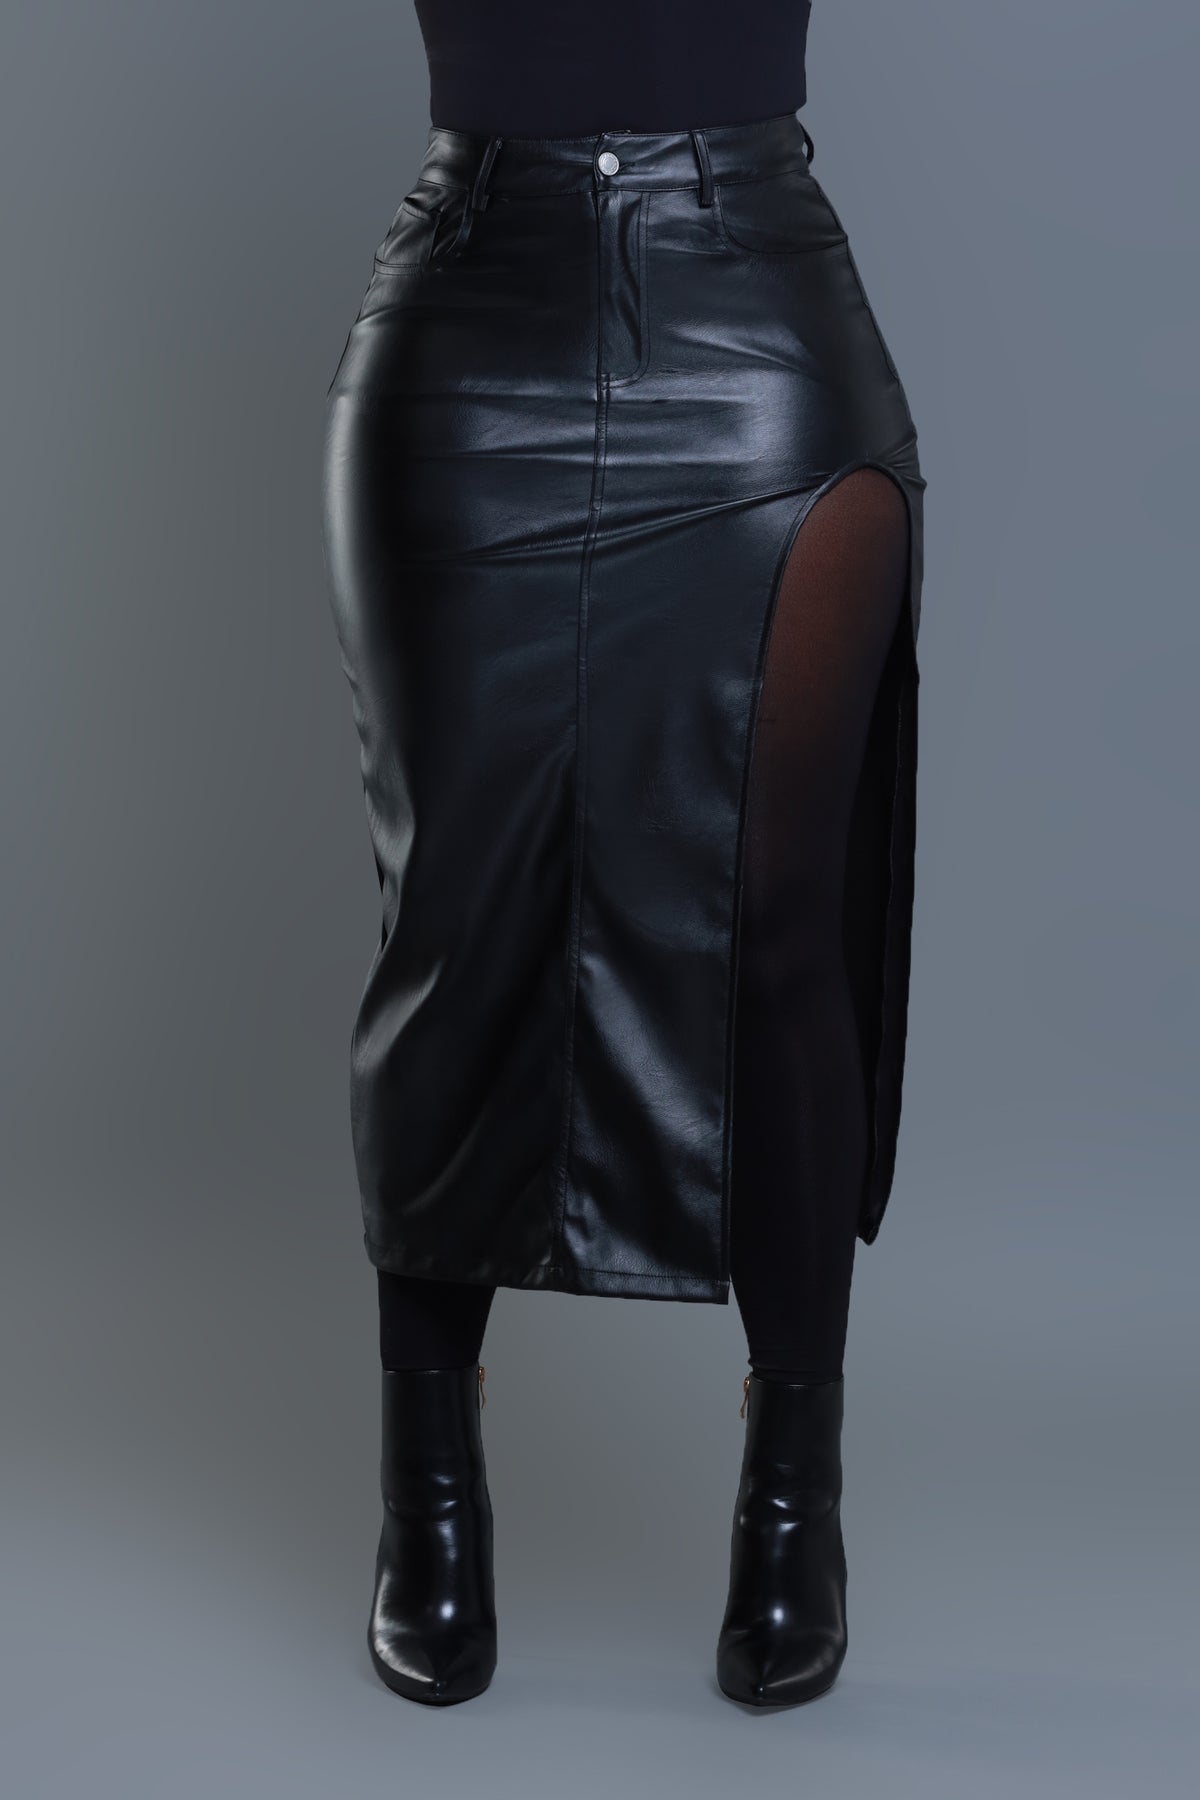 
              Night Owl Faux Leather High Cut Skirt - Black - Swank A Posh
            